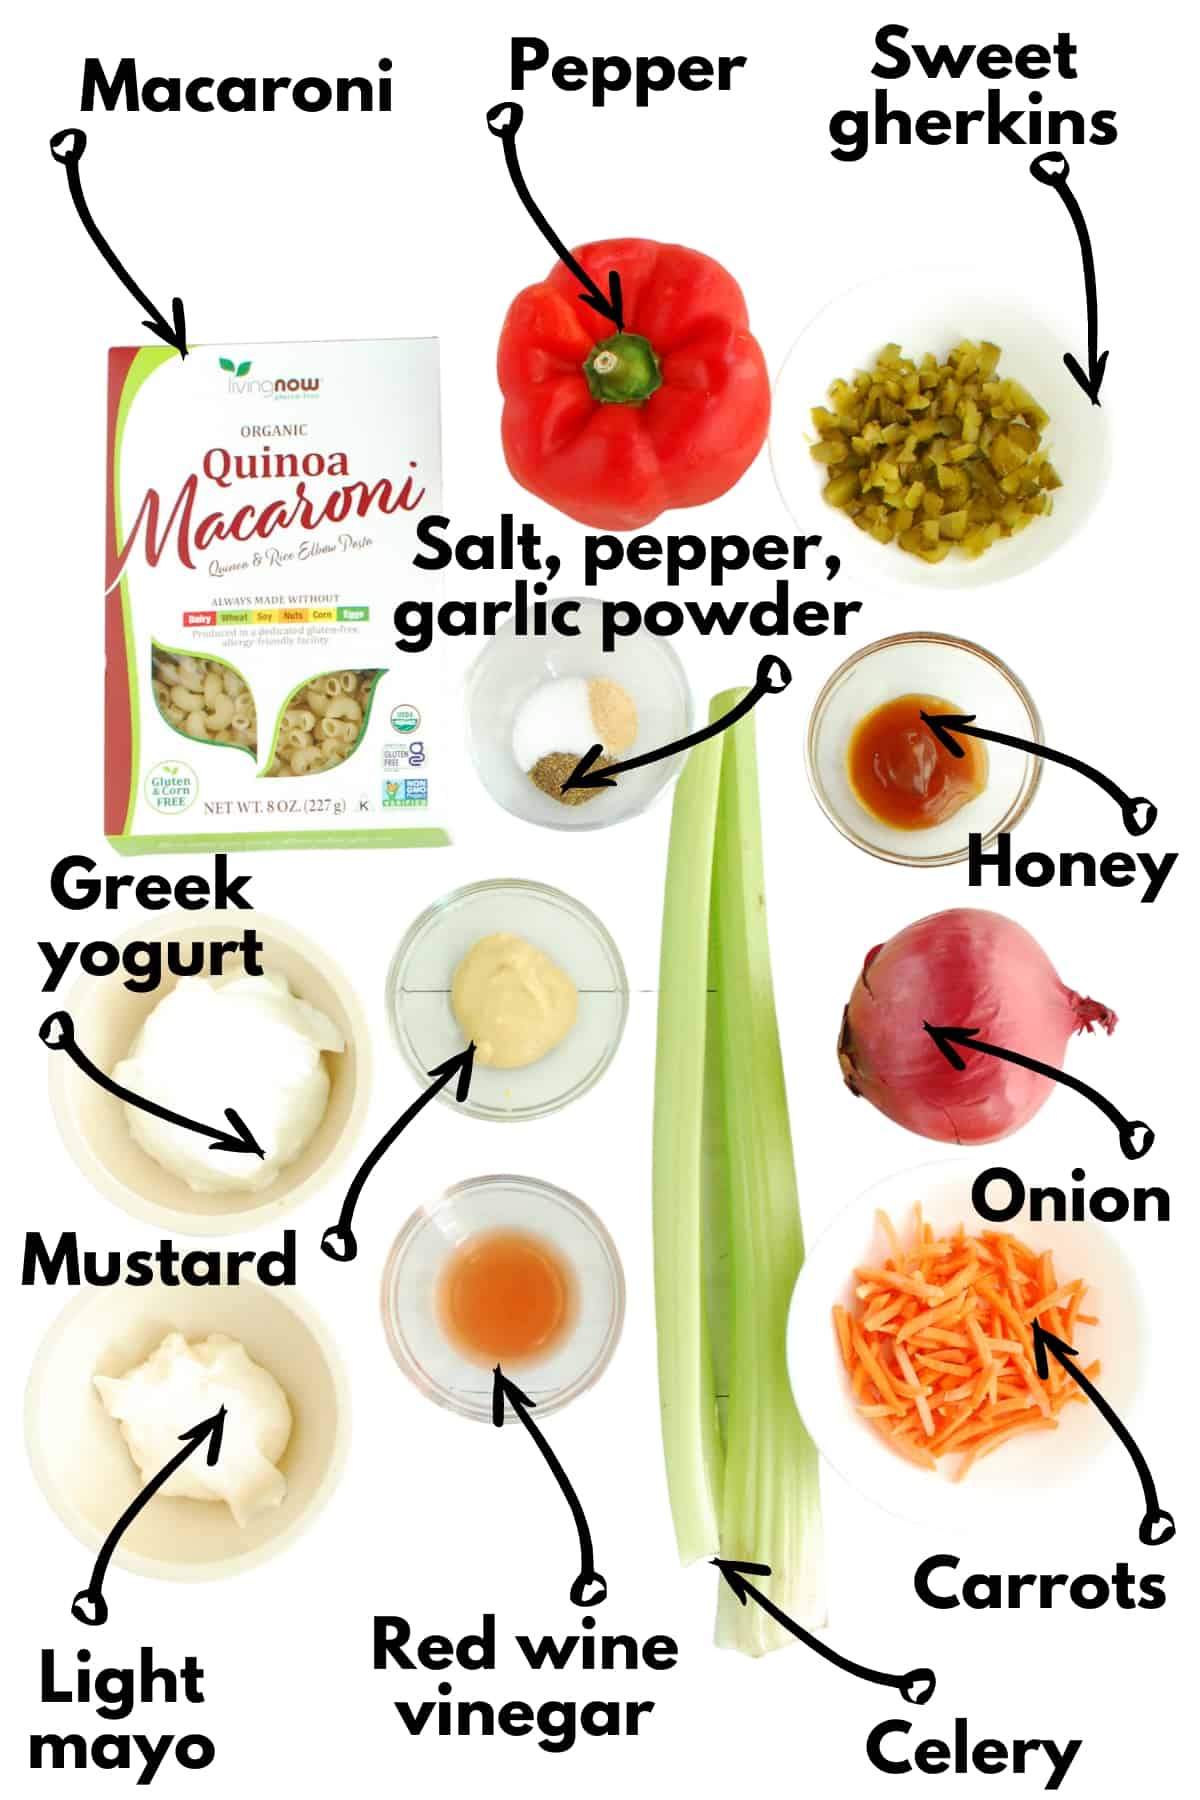 Macaroni, celery, pepper, pickles, onion, carrots, greek yogurt, light mayo,, vinegar, mustard, and seasonings.